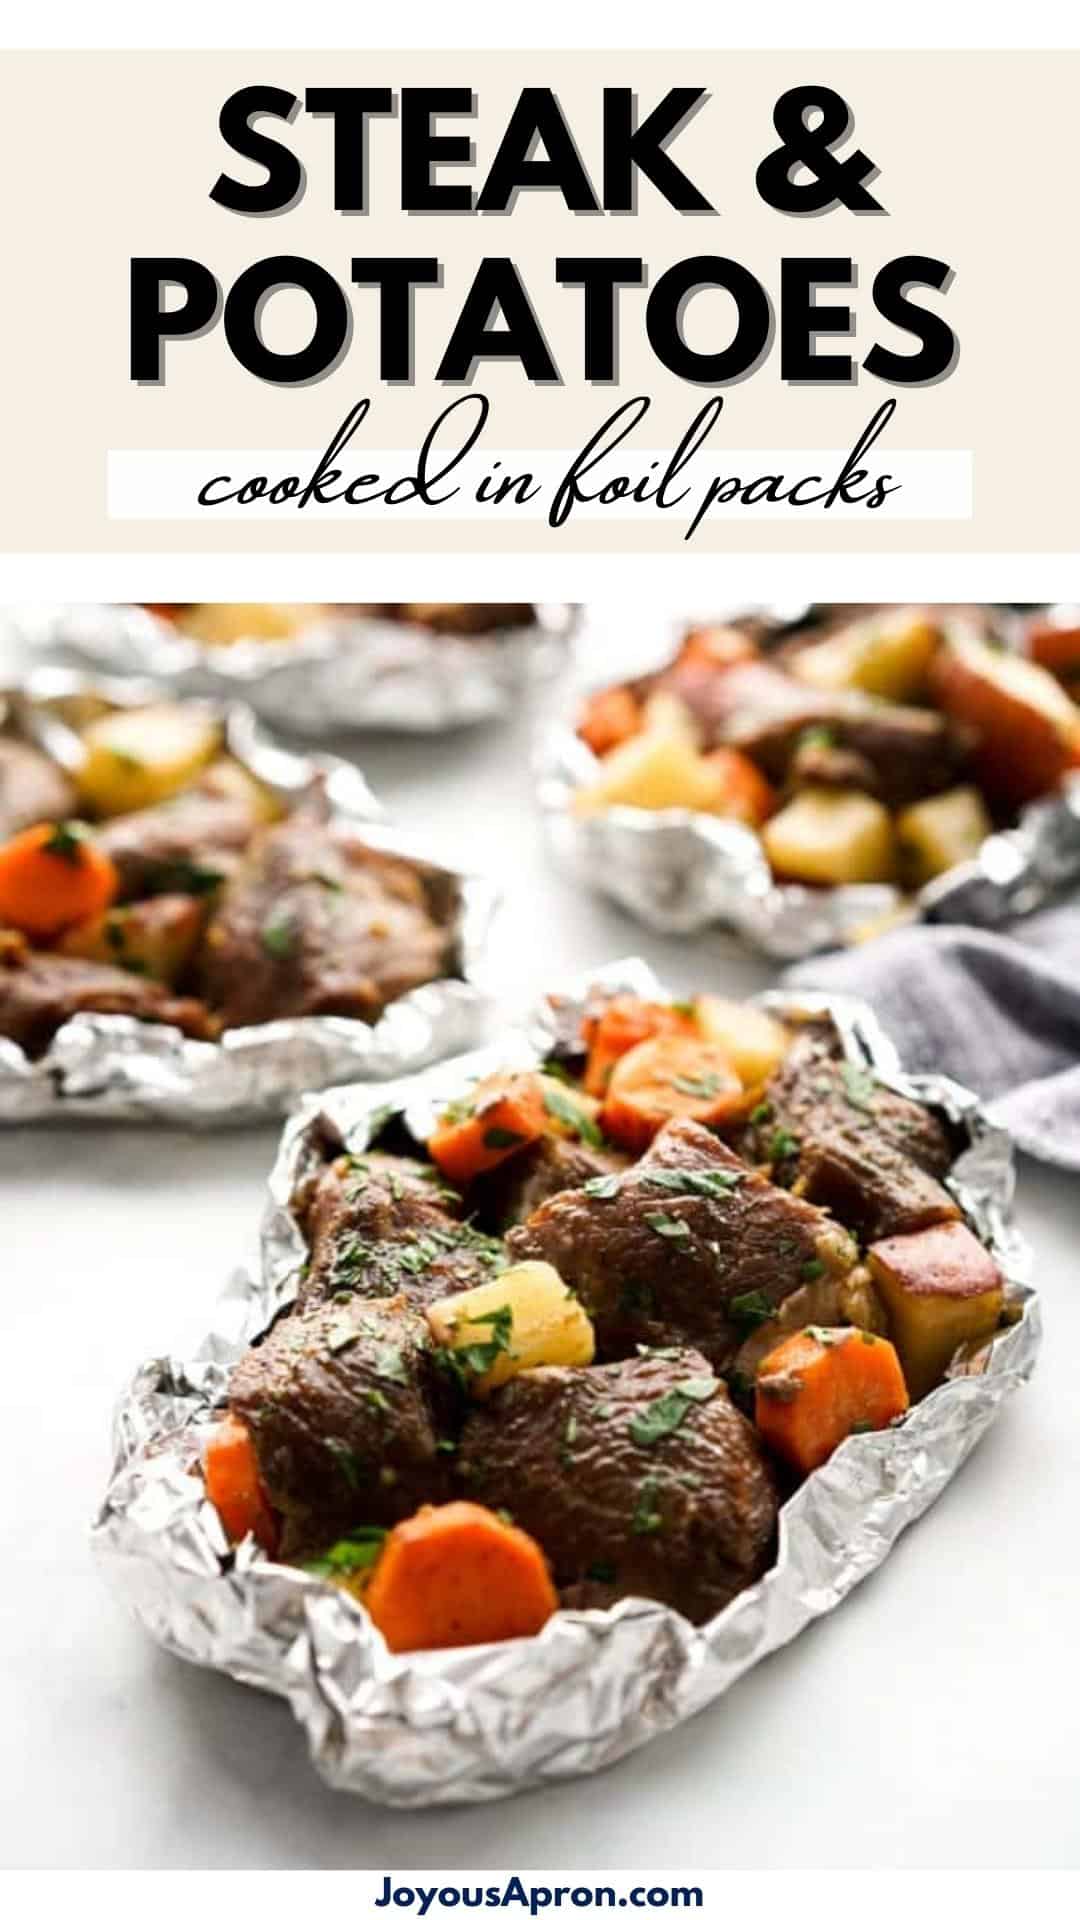 Cajun Steak and Potato Foil Packs via @joyousapron